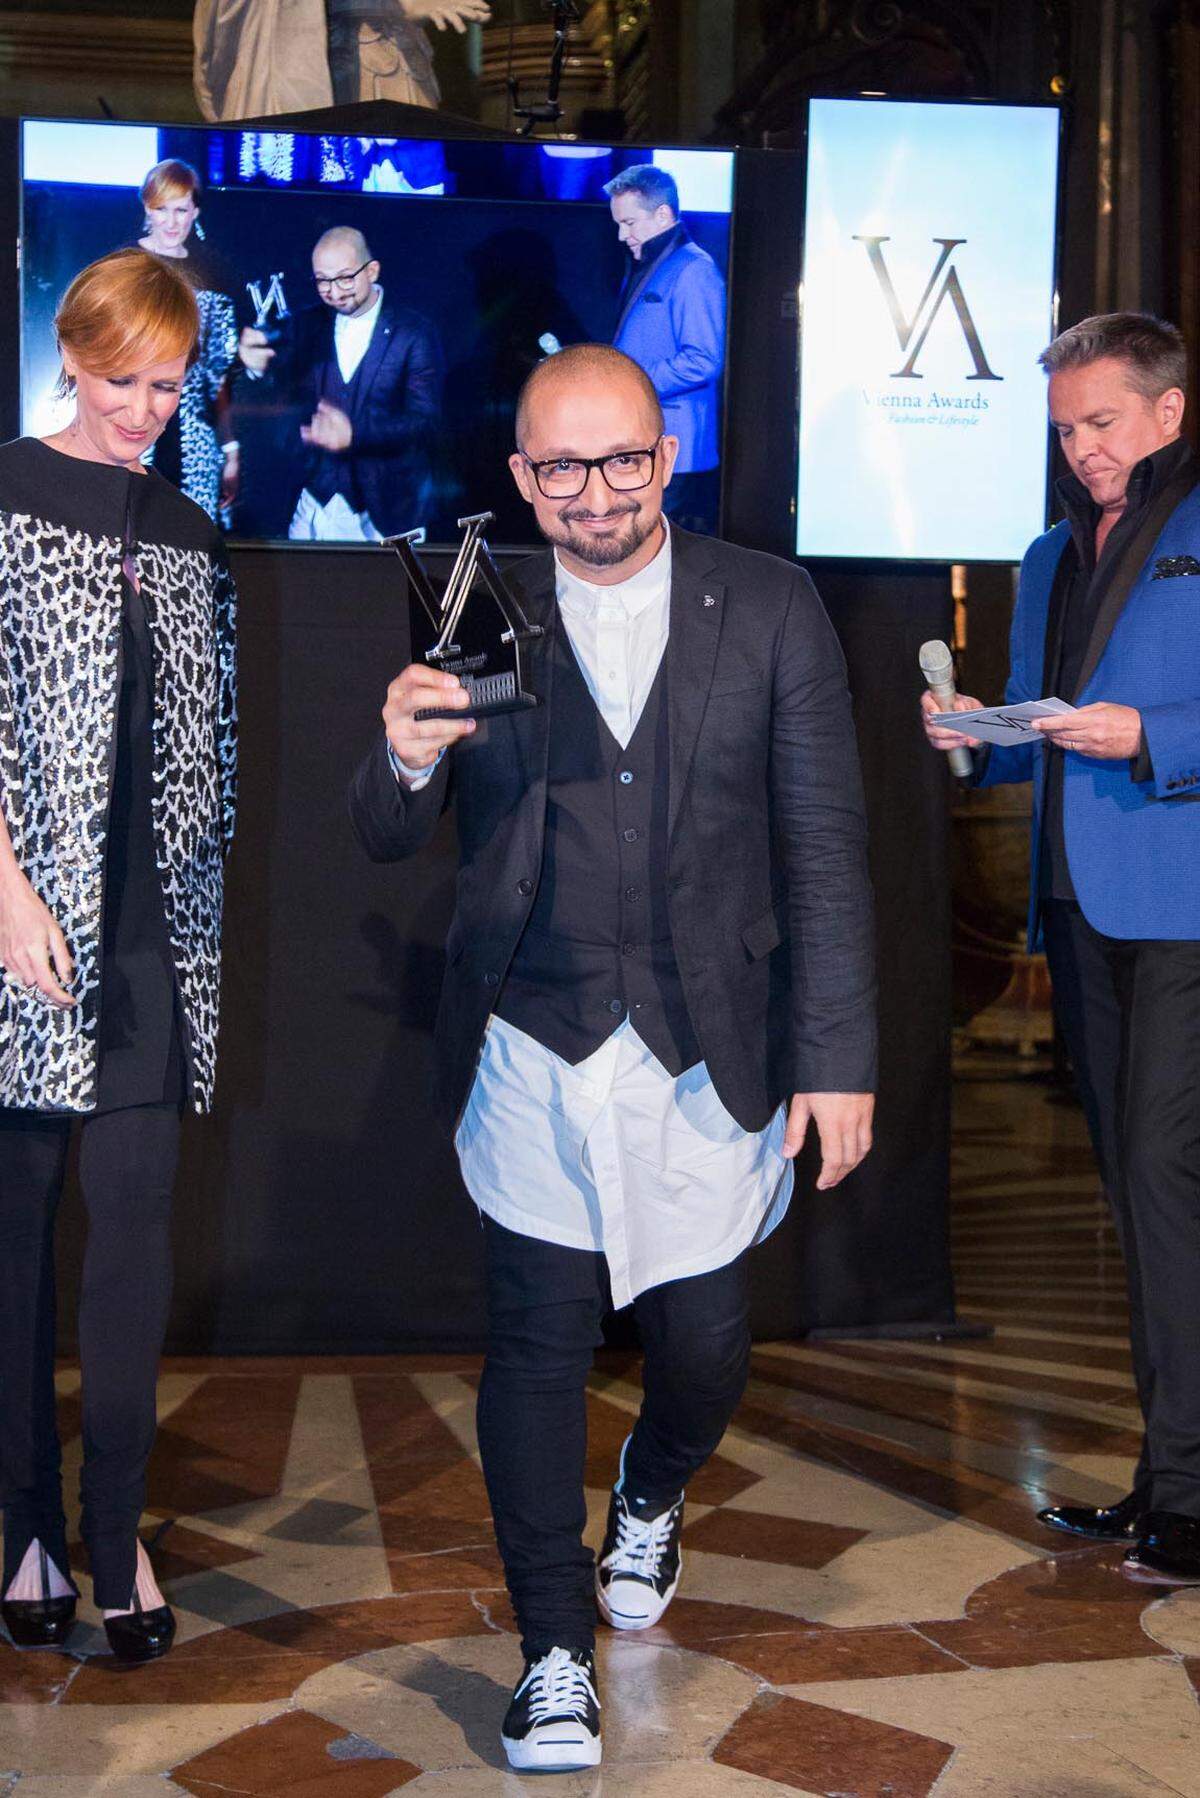 Nicole Beutler übergab den Award "Stylist of the Year" an Ali Rabbani.